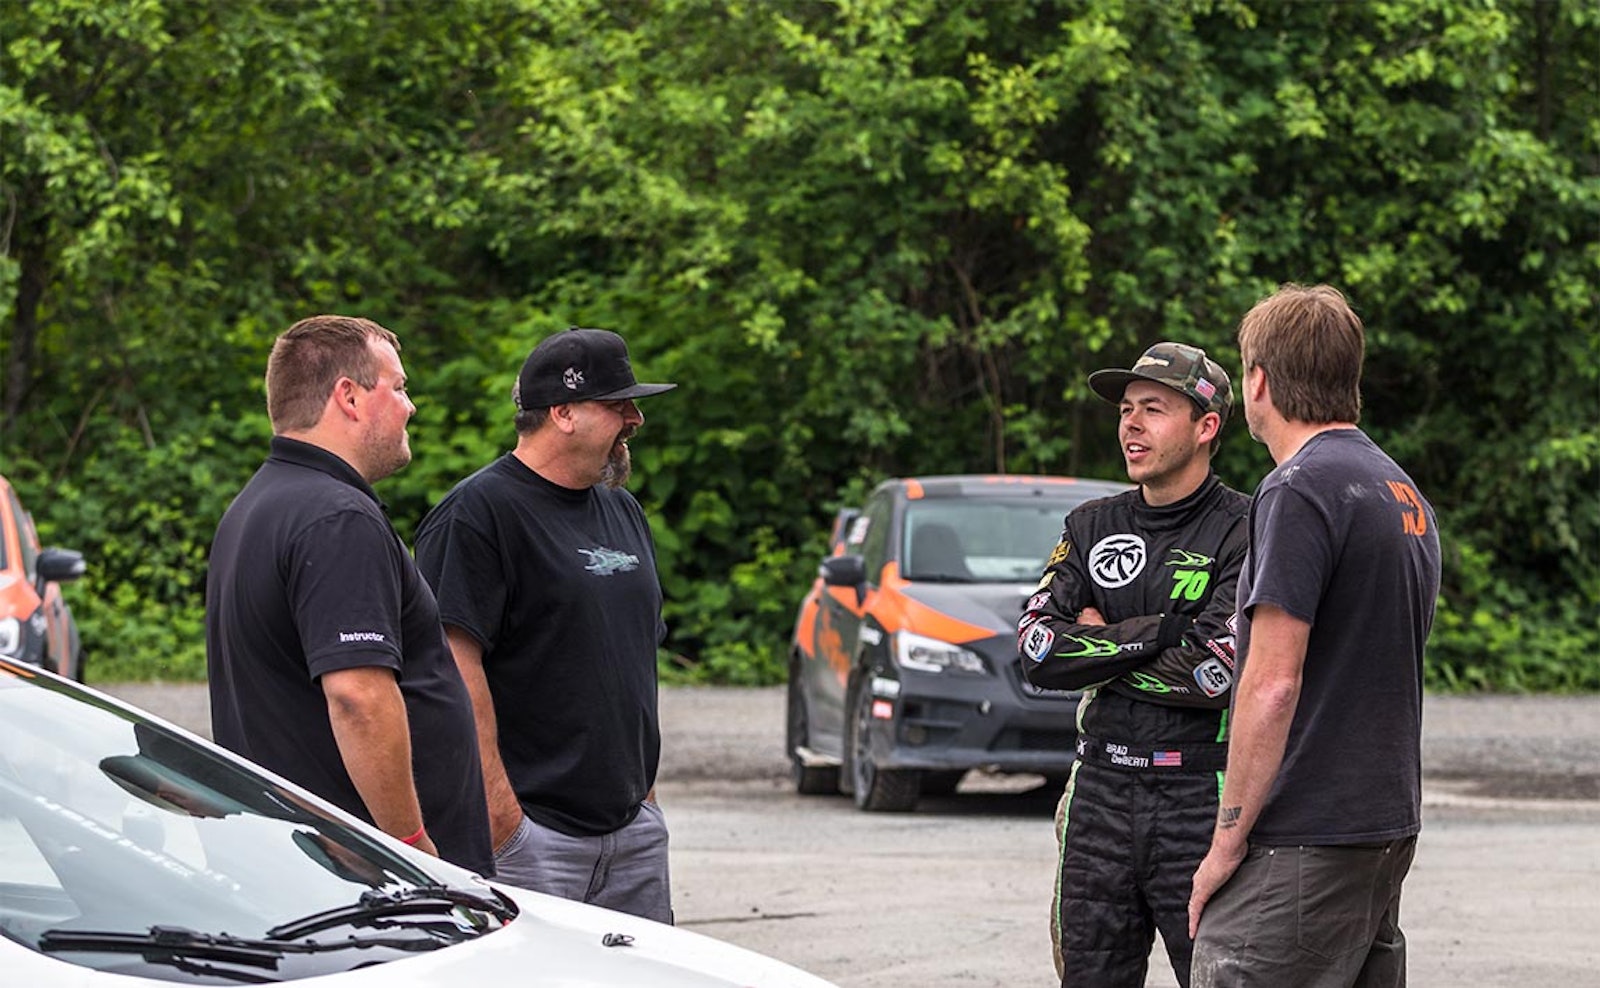 Brad DeBerti and Doug DeBerti talking with motorsports team at DirtFish